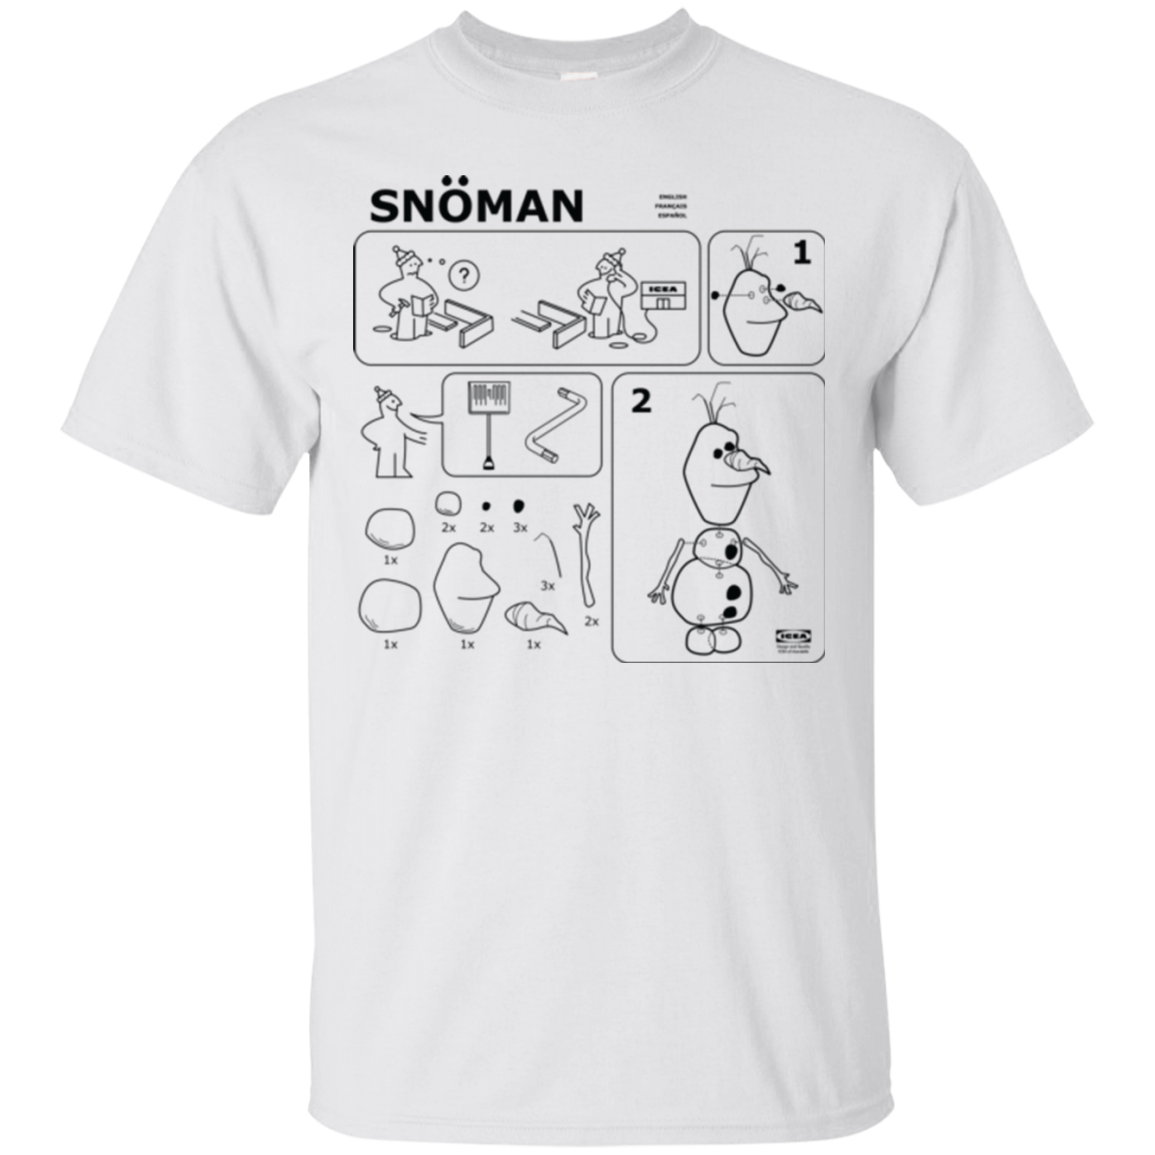 Build a Snowman T-Shirt